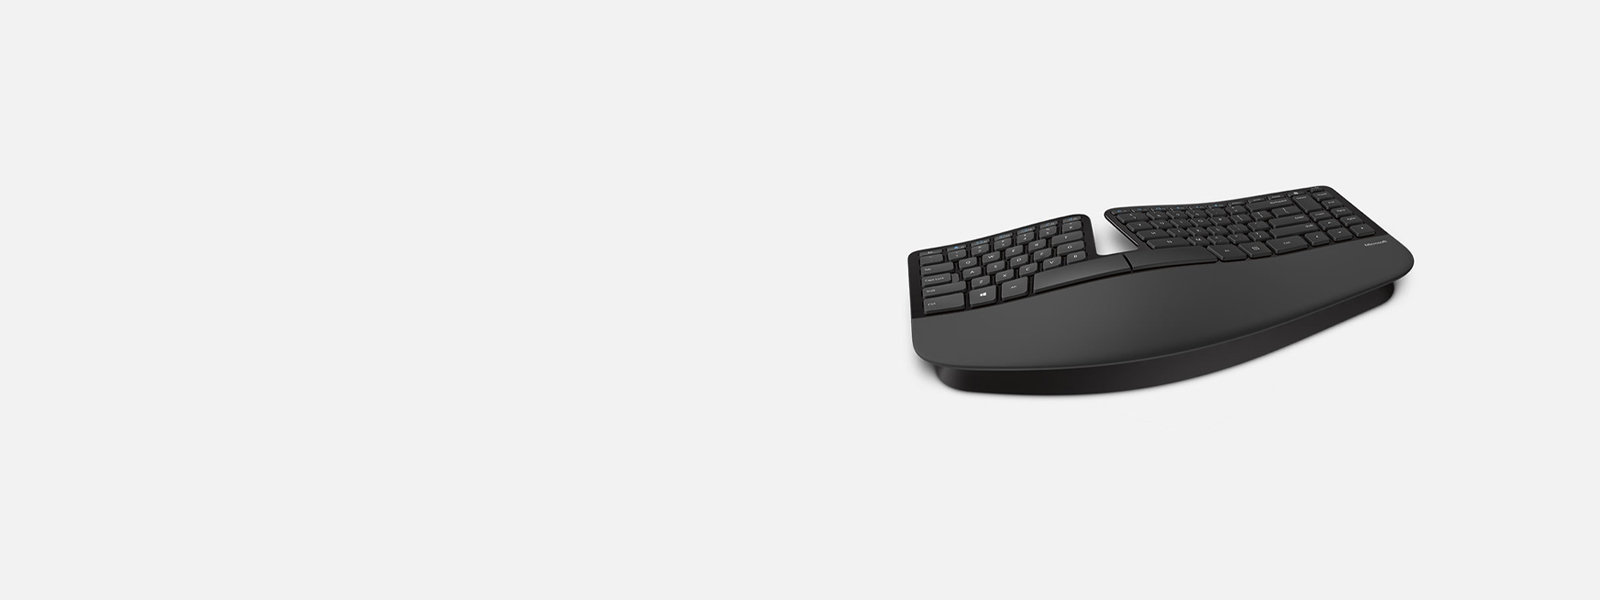 Sculpt Ergonomic Keyboard for Business | Microsoft Business Accessories